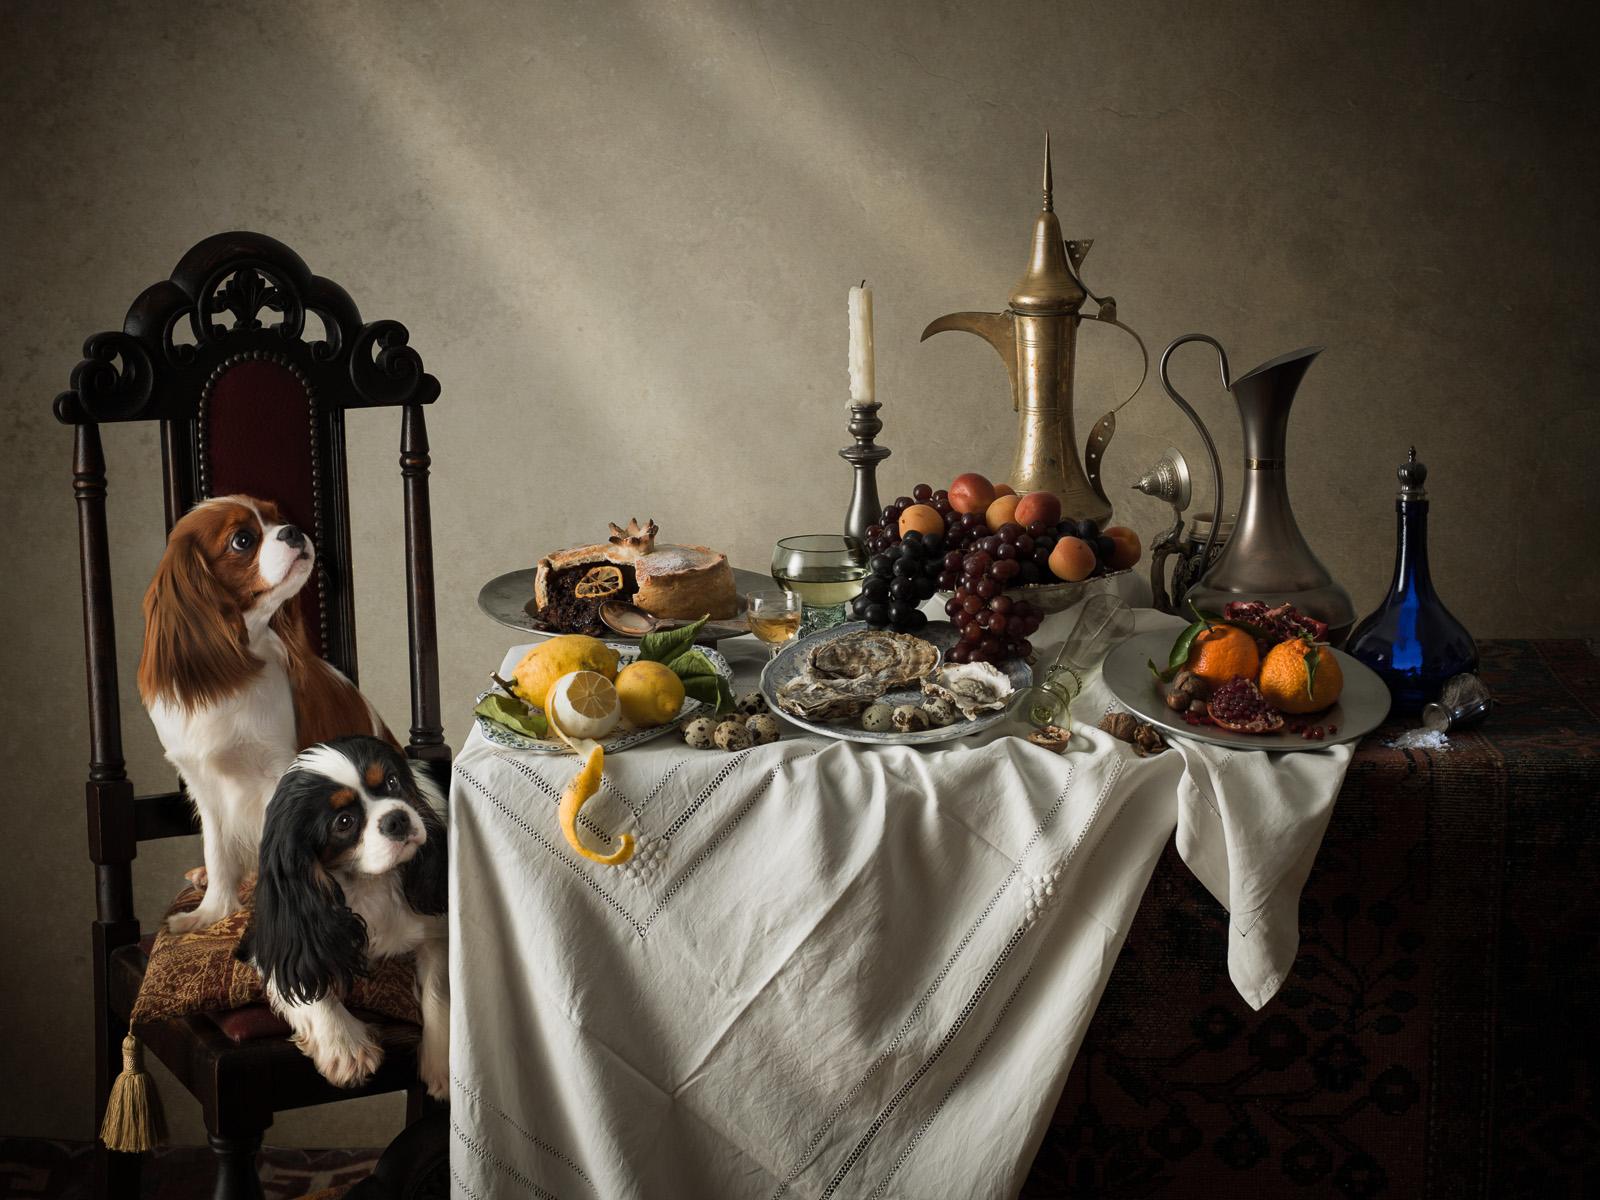 Still-Life Photograph Tim Platt - Dog Dutch #3 King Charles Spaniels - Animal signé, édition limitée contemporaine